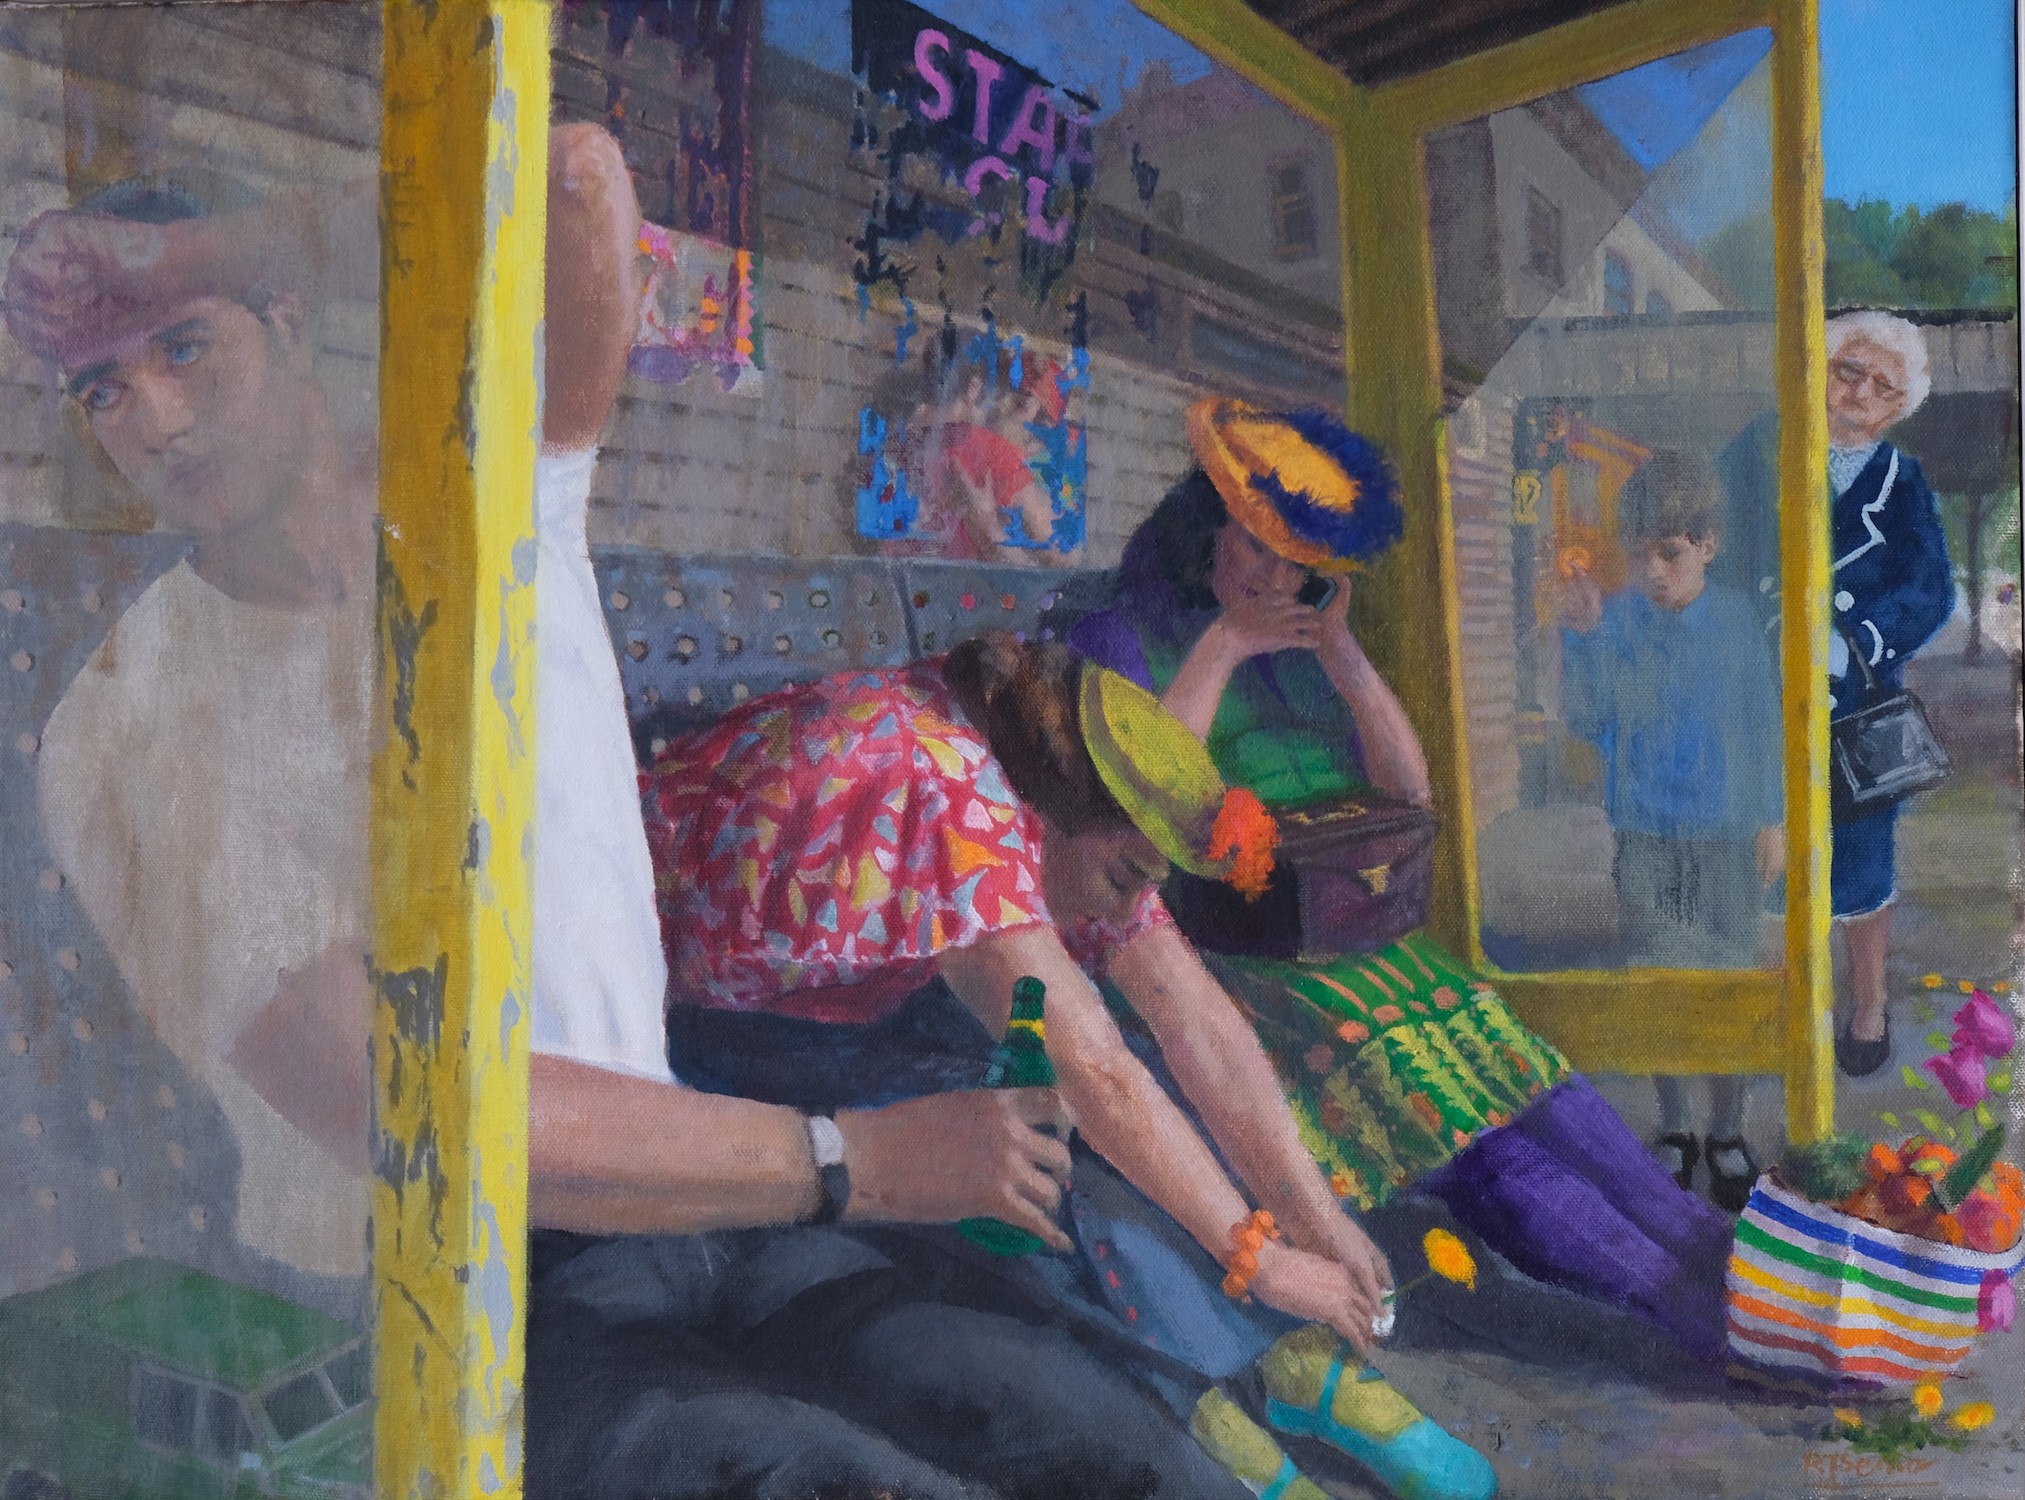 'Train Station', Robert Senior, Oil on canvas, 48 x 63 cm